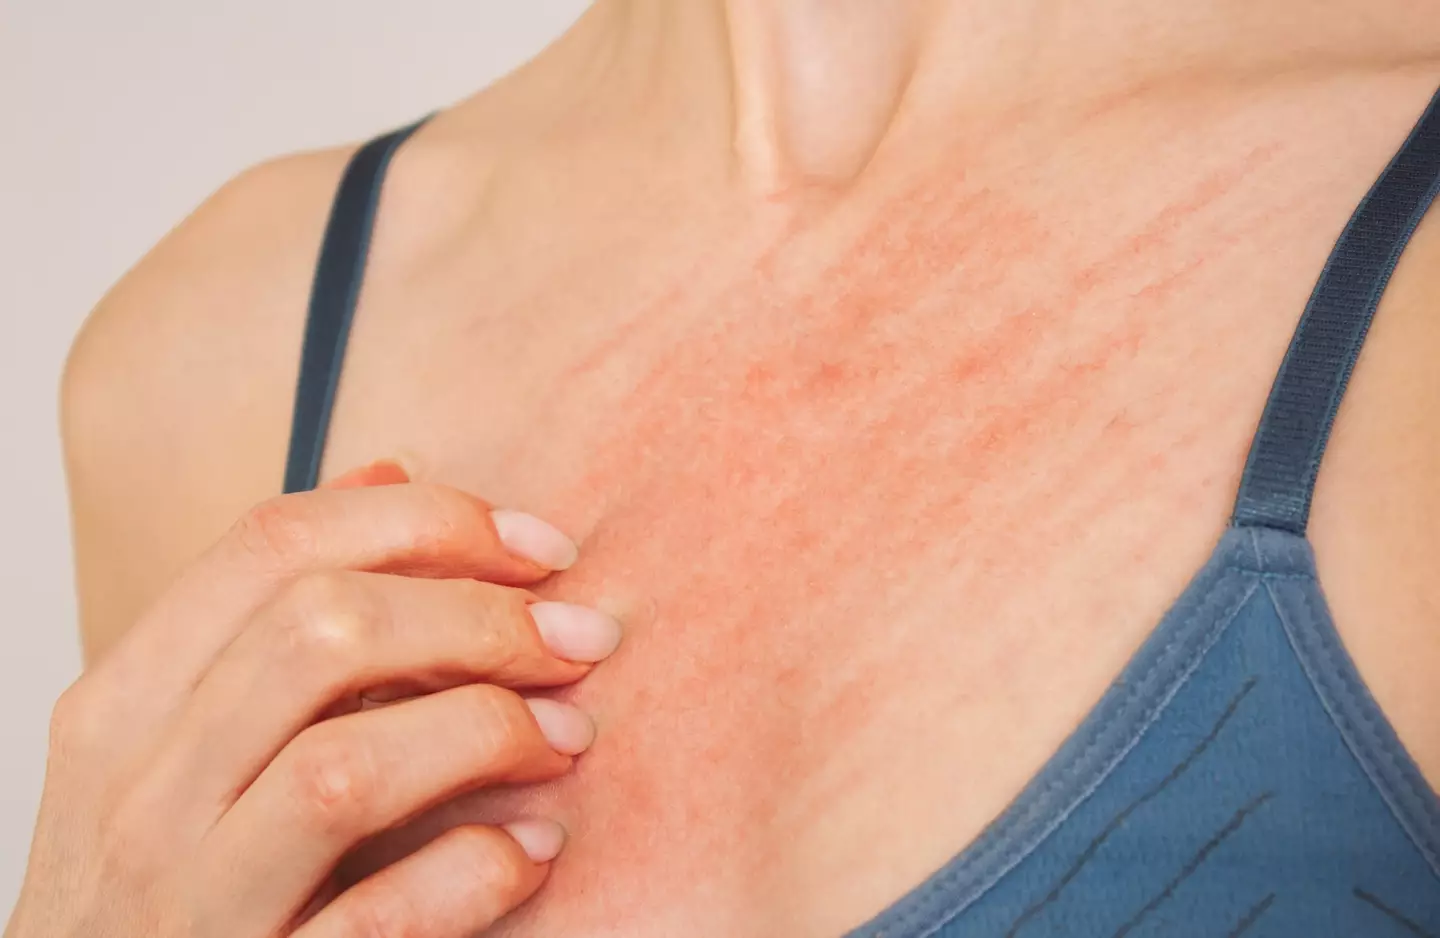 An itchy rash is the main symptom.